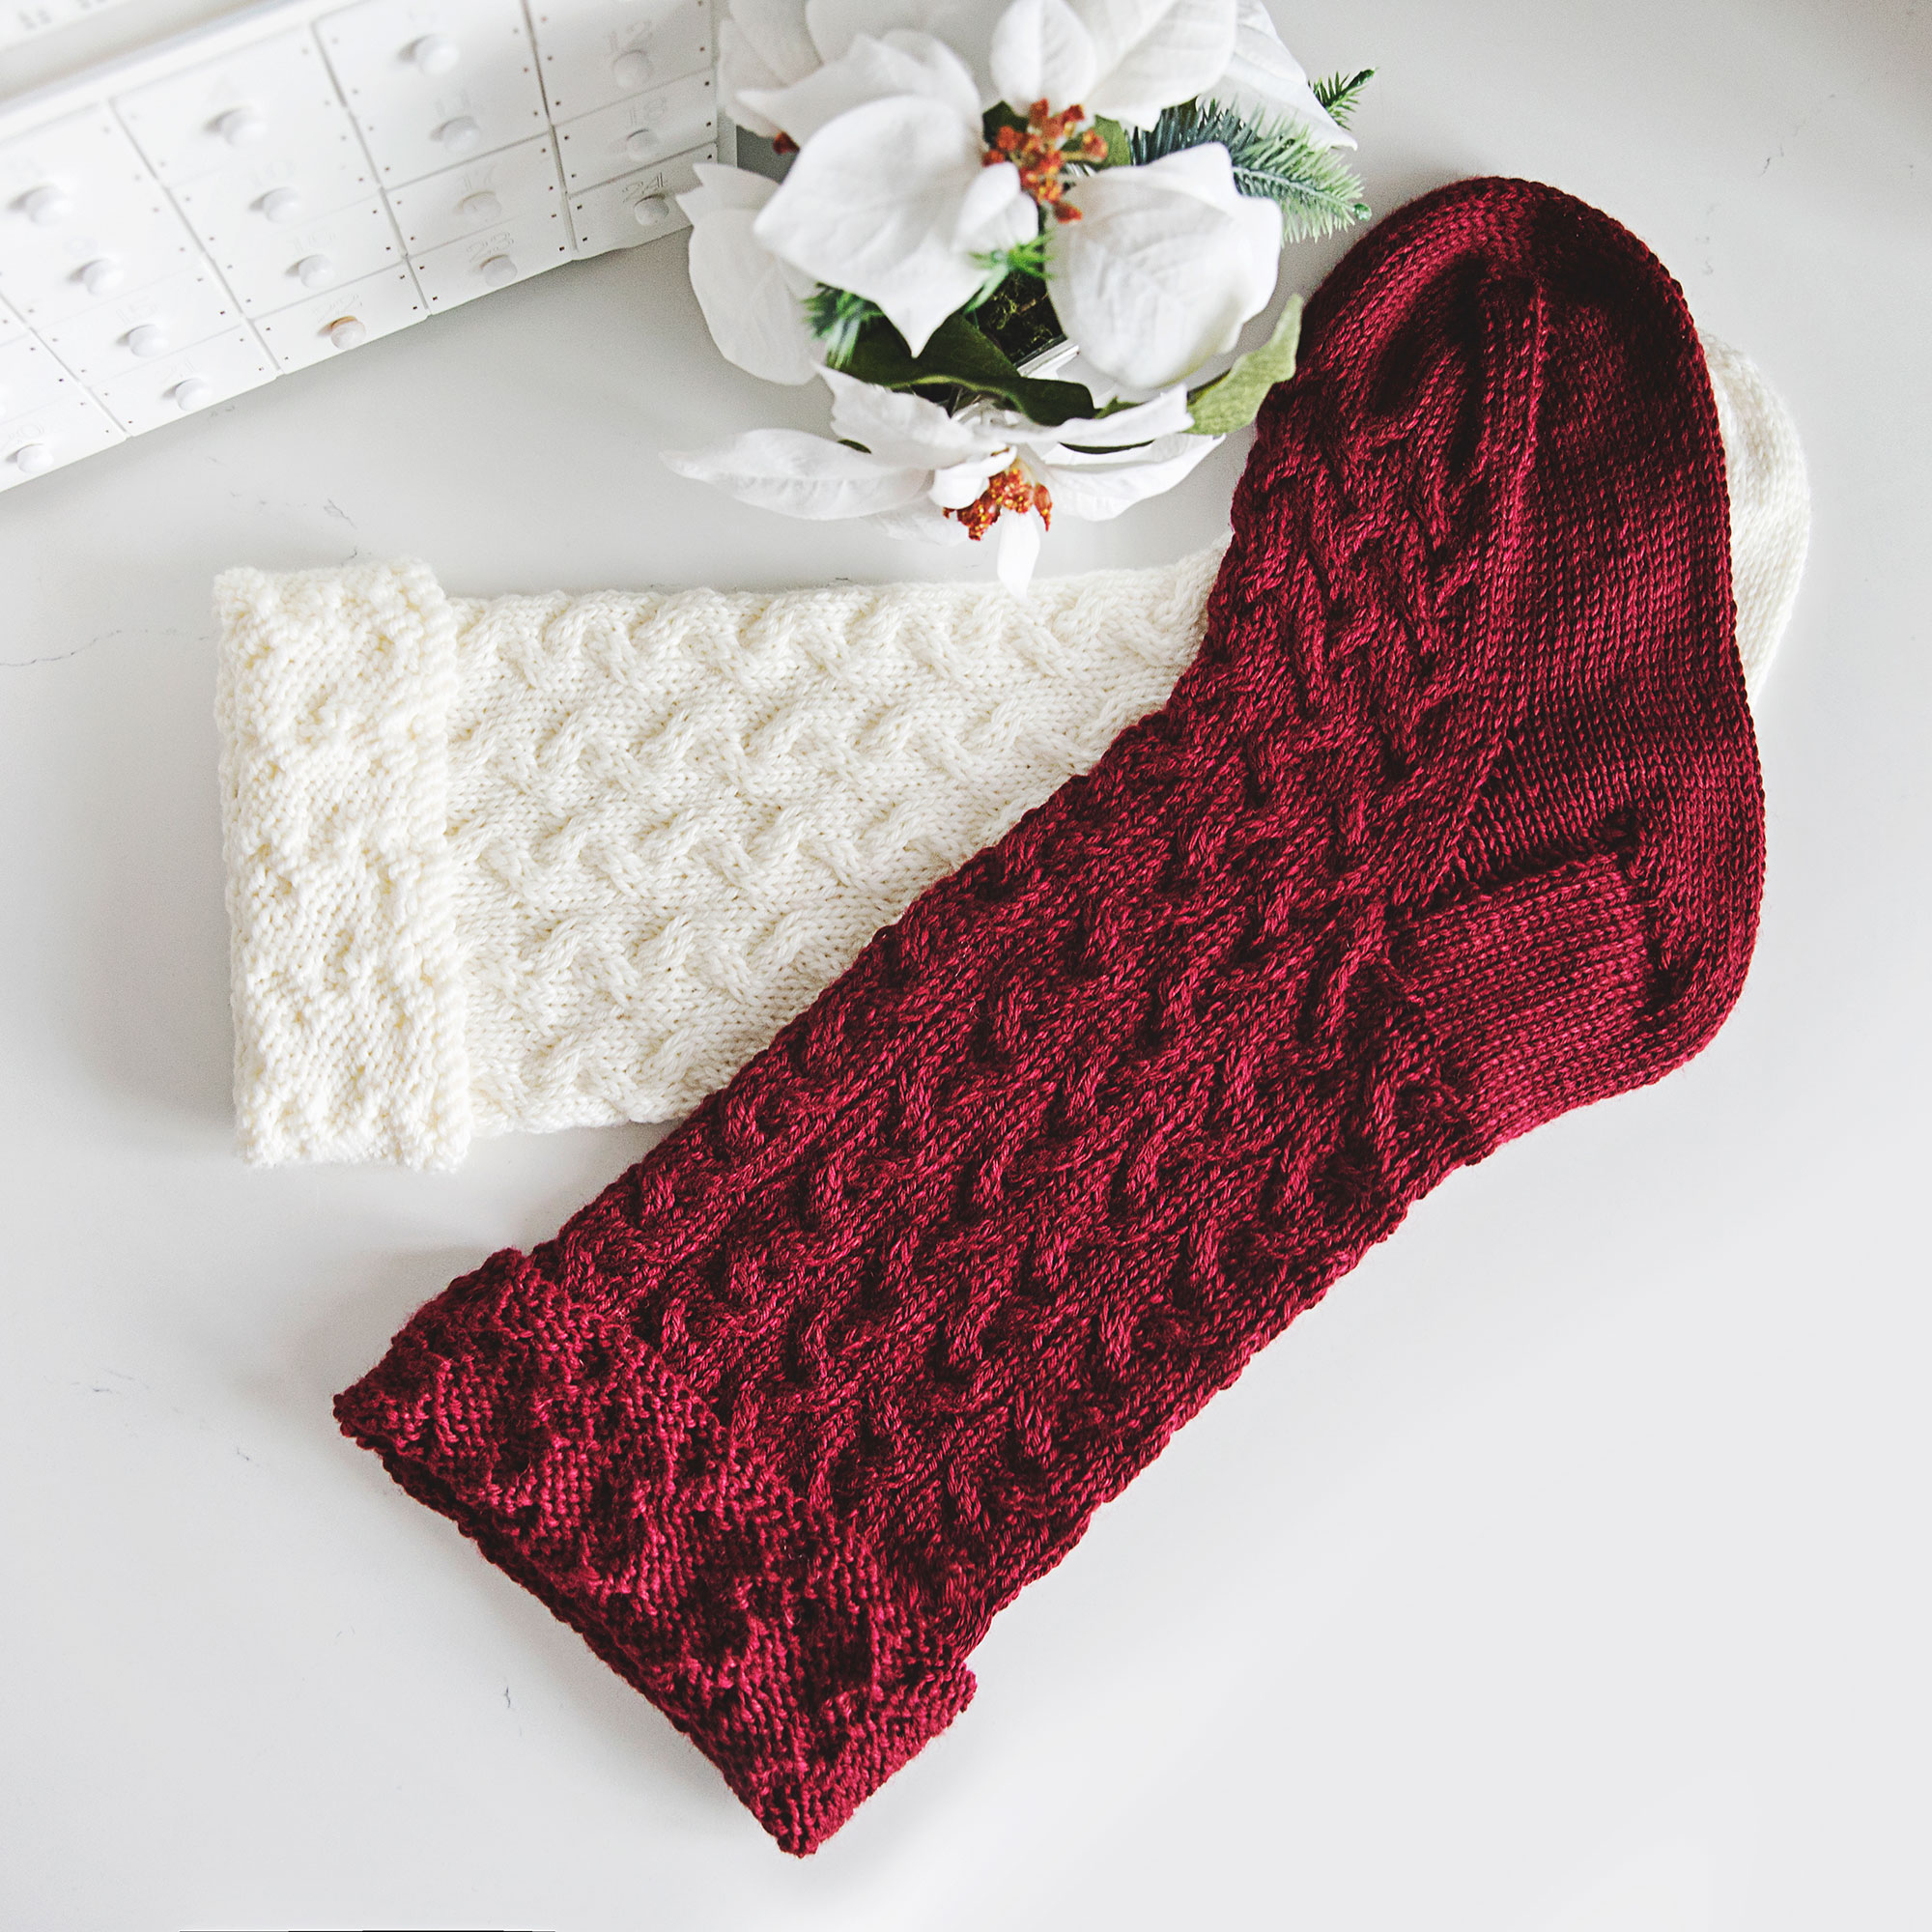 Christmas Stocking Knitting Pattern - Leelee Knits